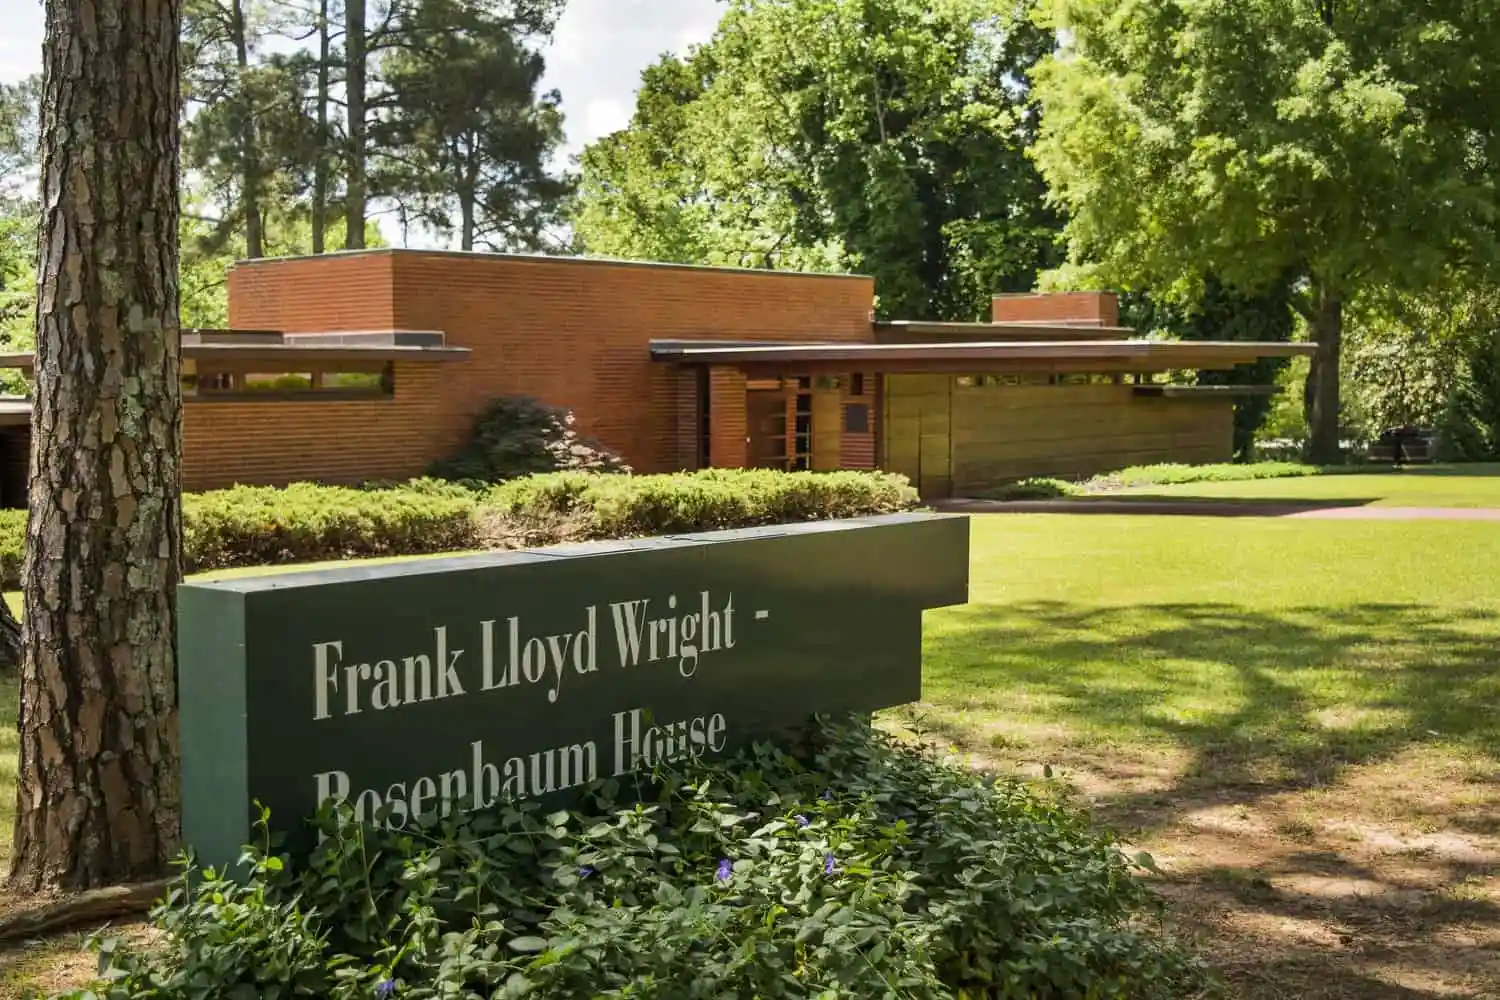 Frank Lloyd Wright Rosenbaum house